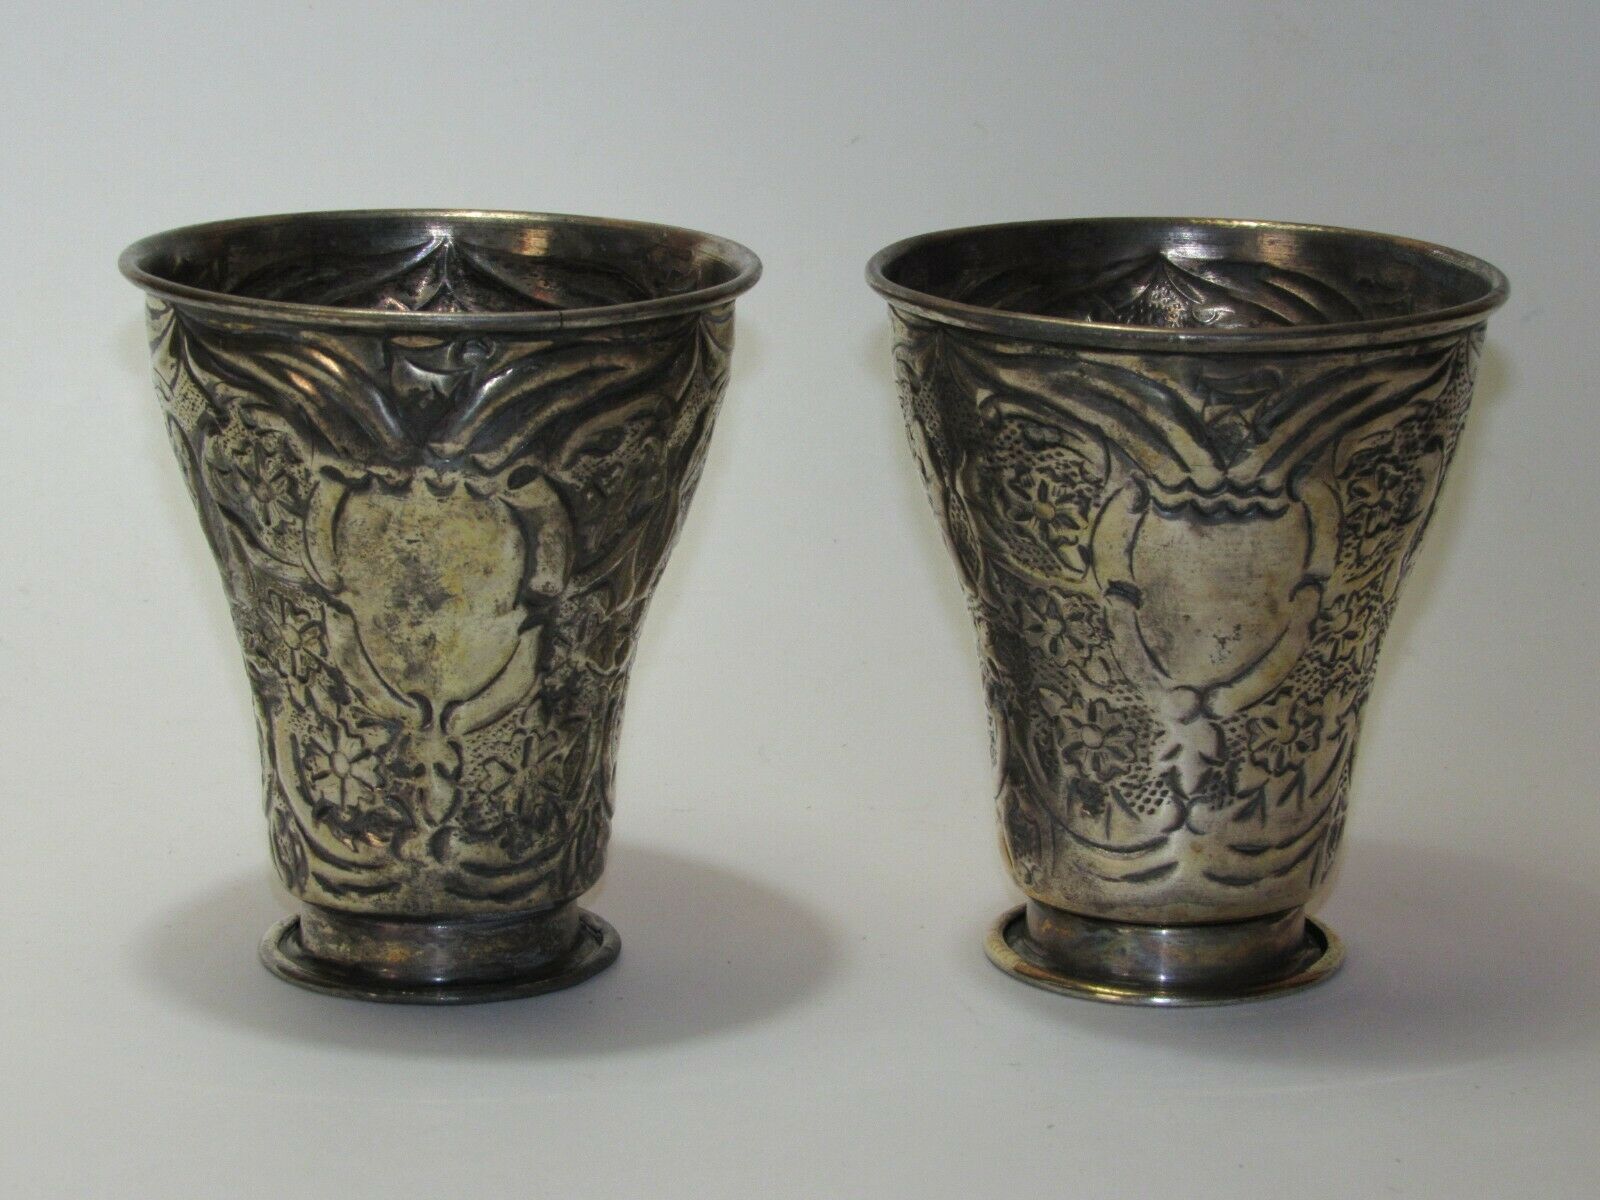 Matching Antique Repousse Floral Design Silver Plate Flower Spill Vase Pair